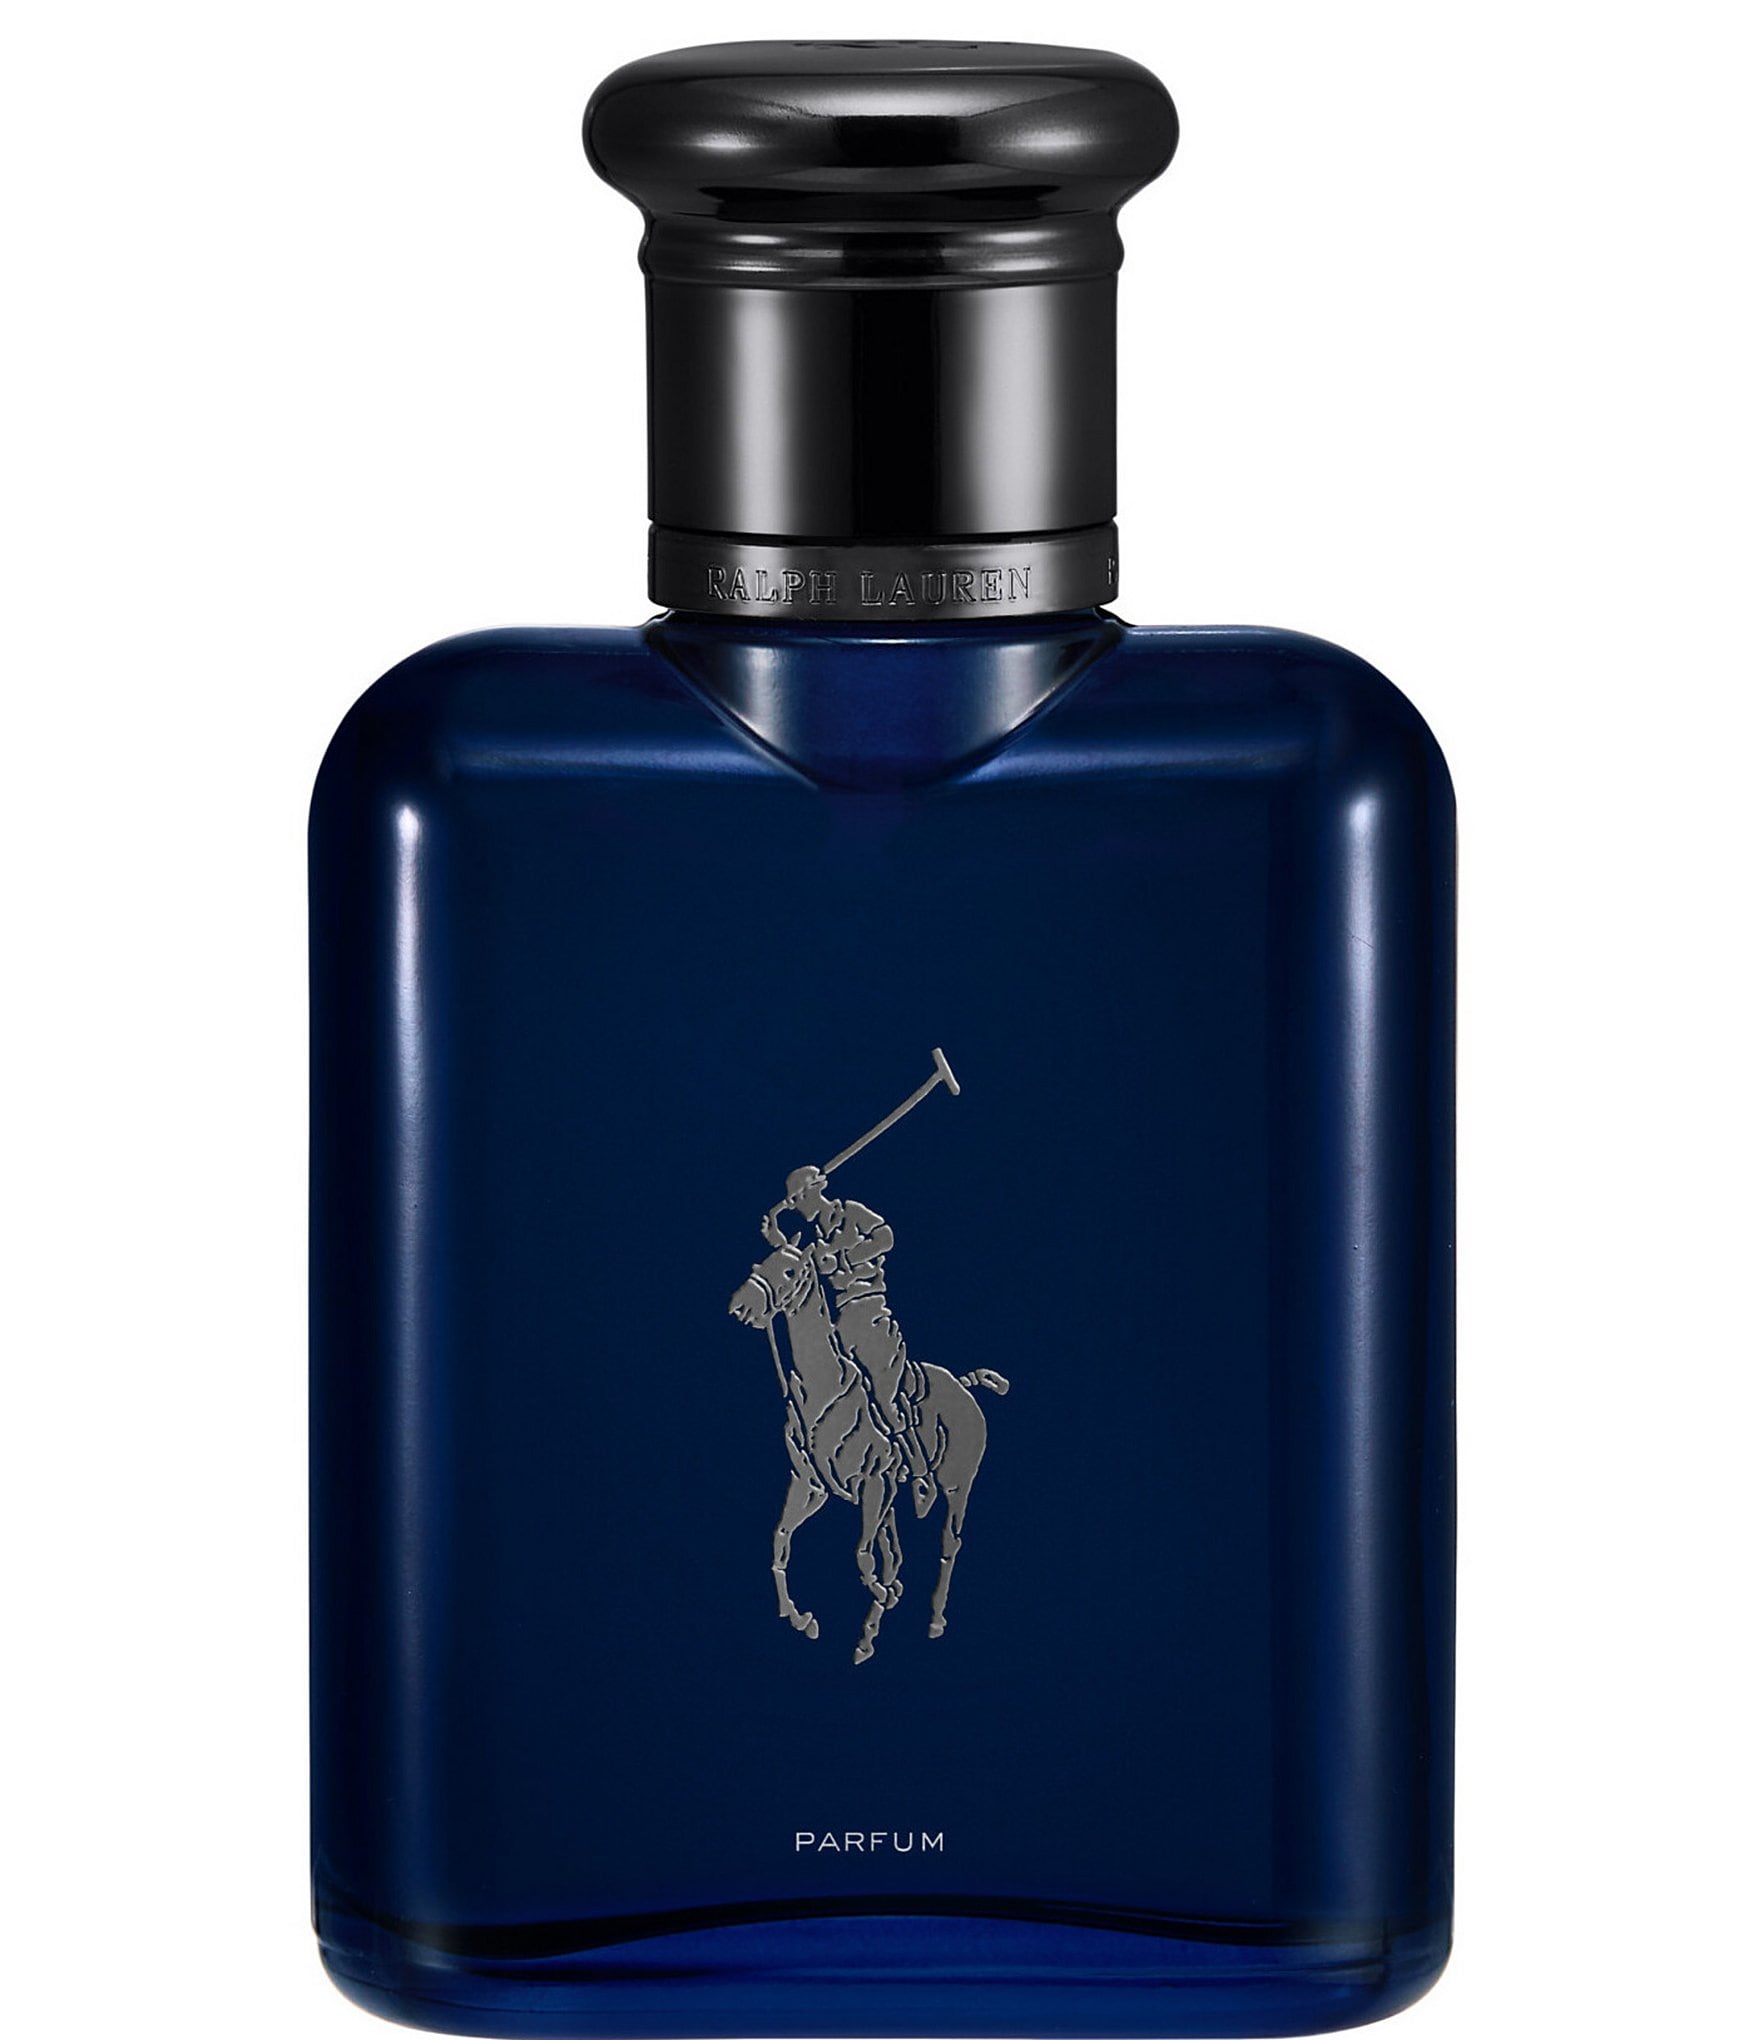 Ralph Lauren Polo Blue Parfum Cologne Spray | Dillard's